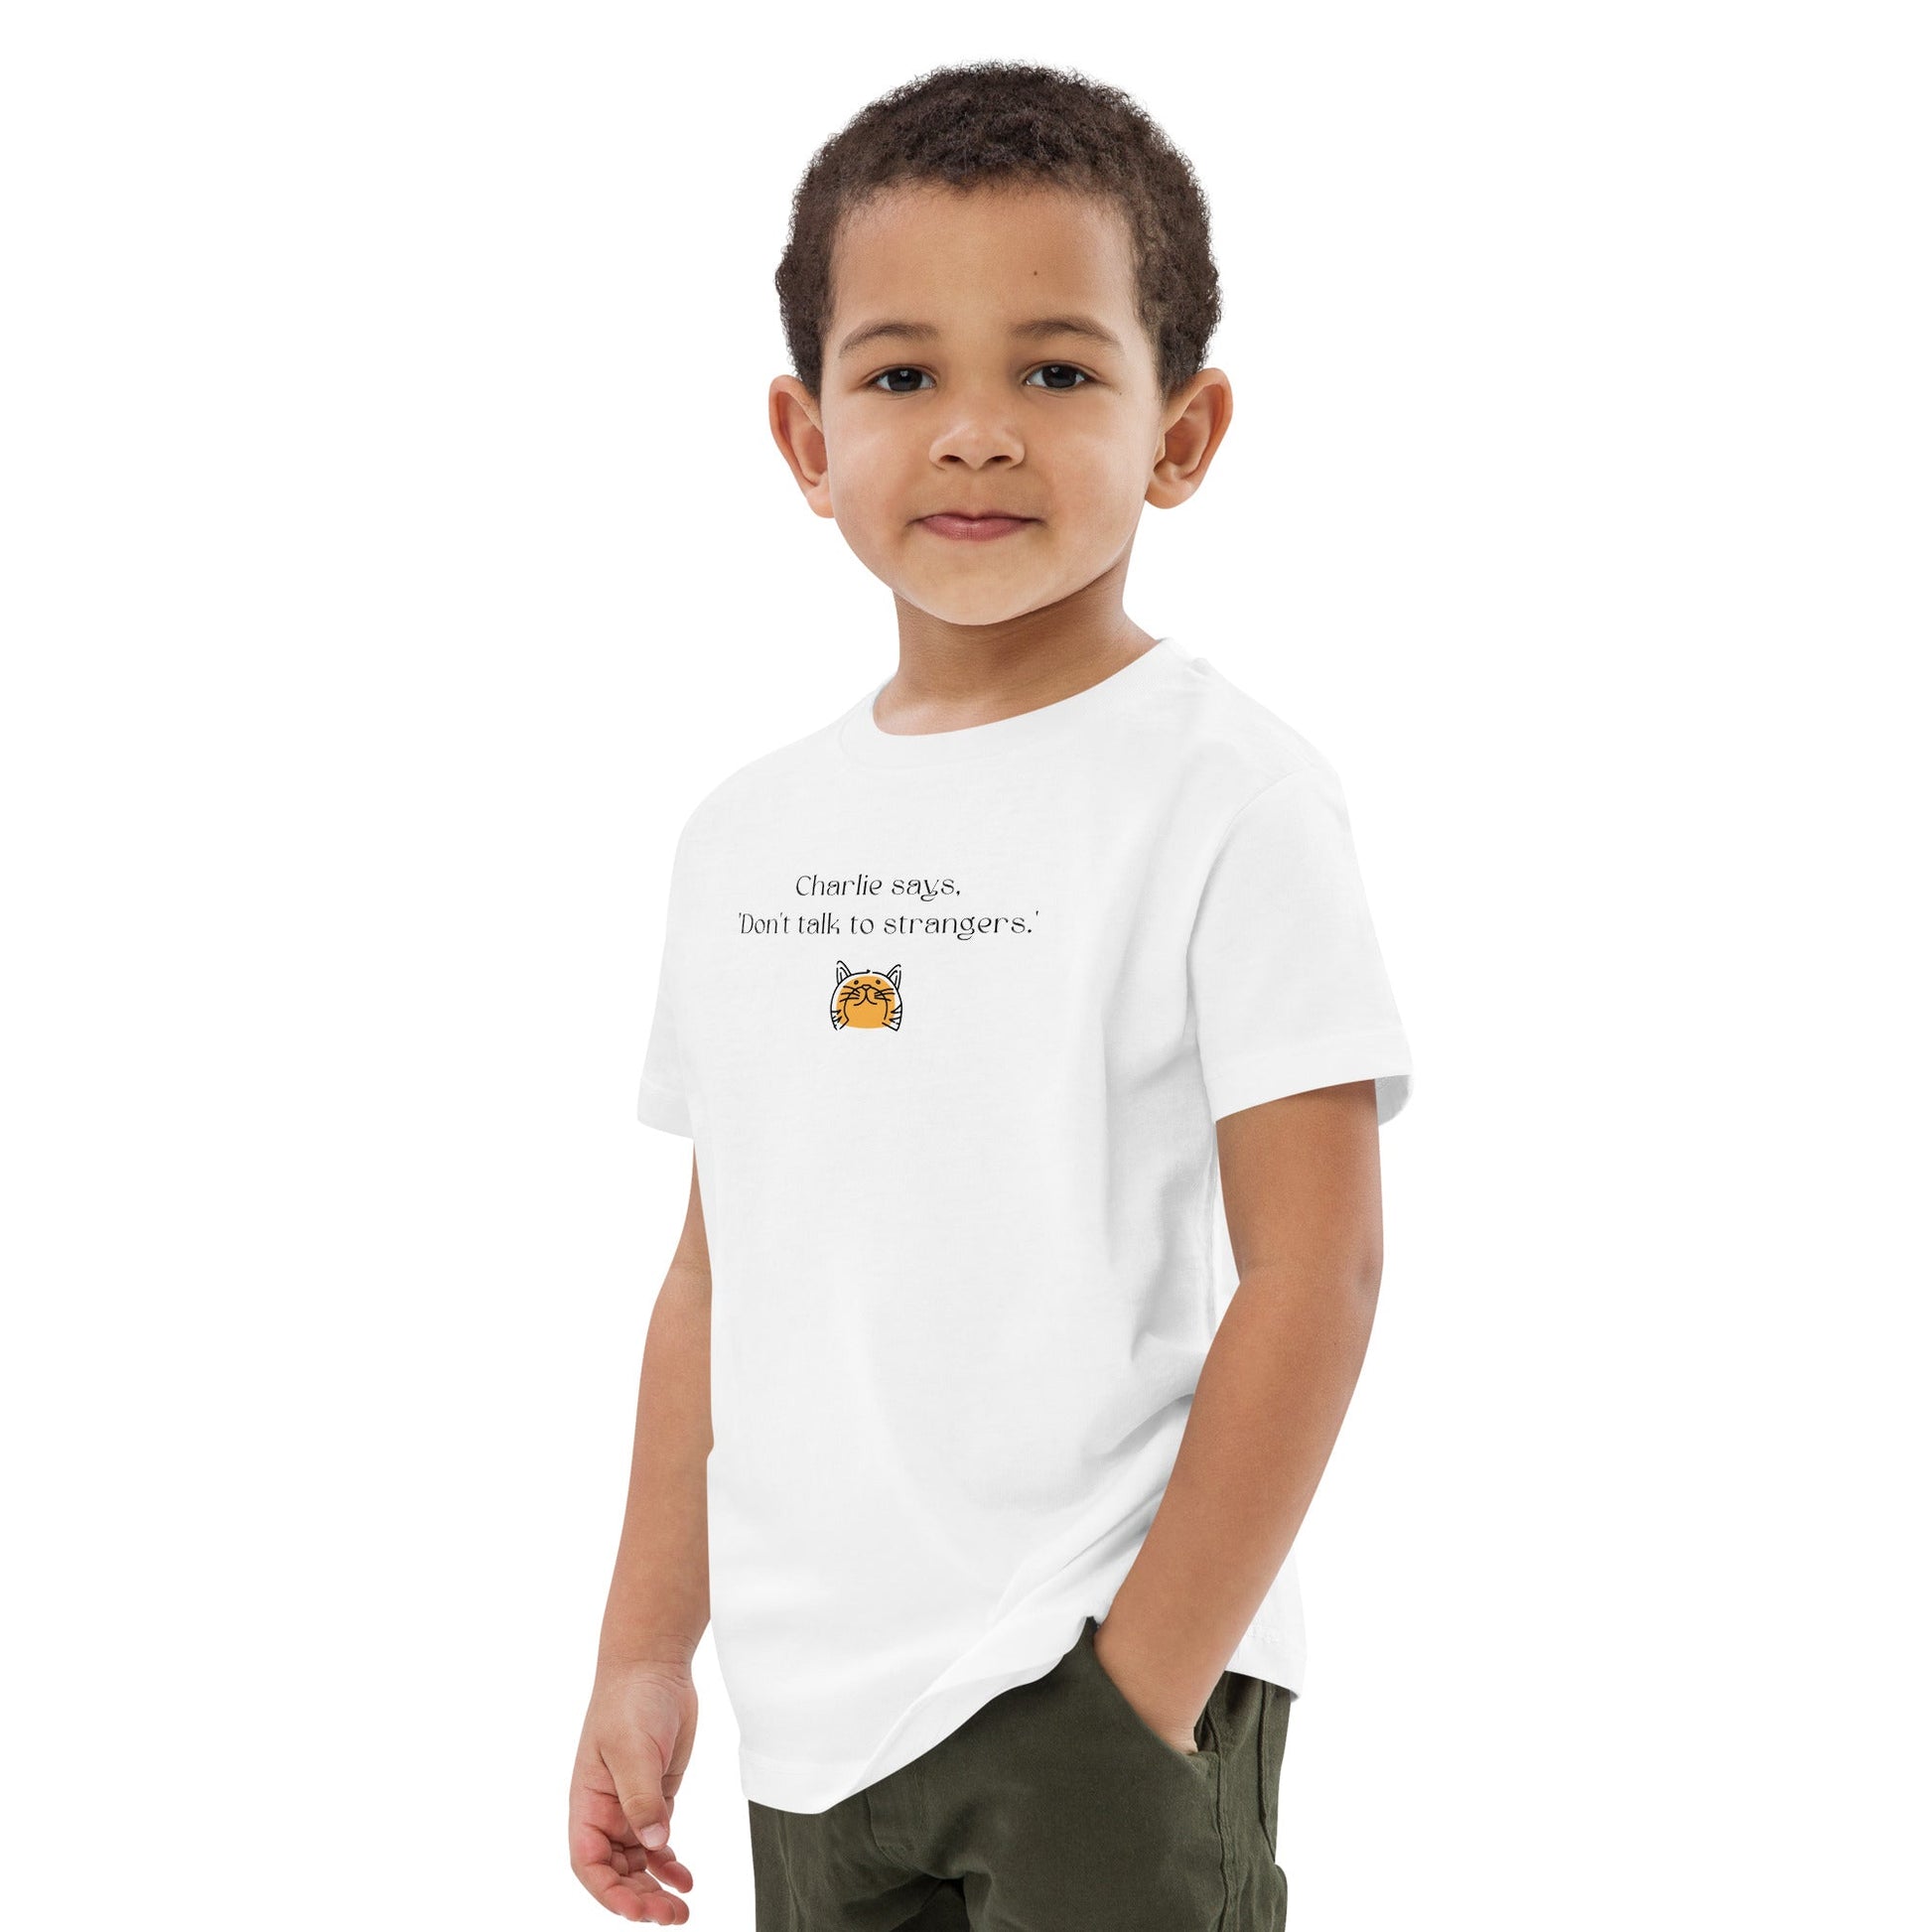 Organic Cotton 'Charlie Says' Kids Funny Cat T-shirt - Funny Animal Shirt